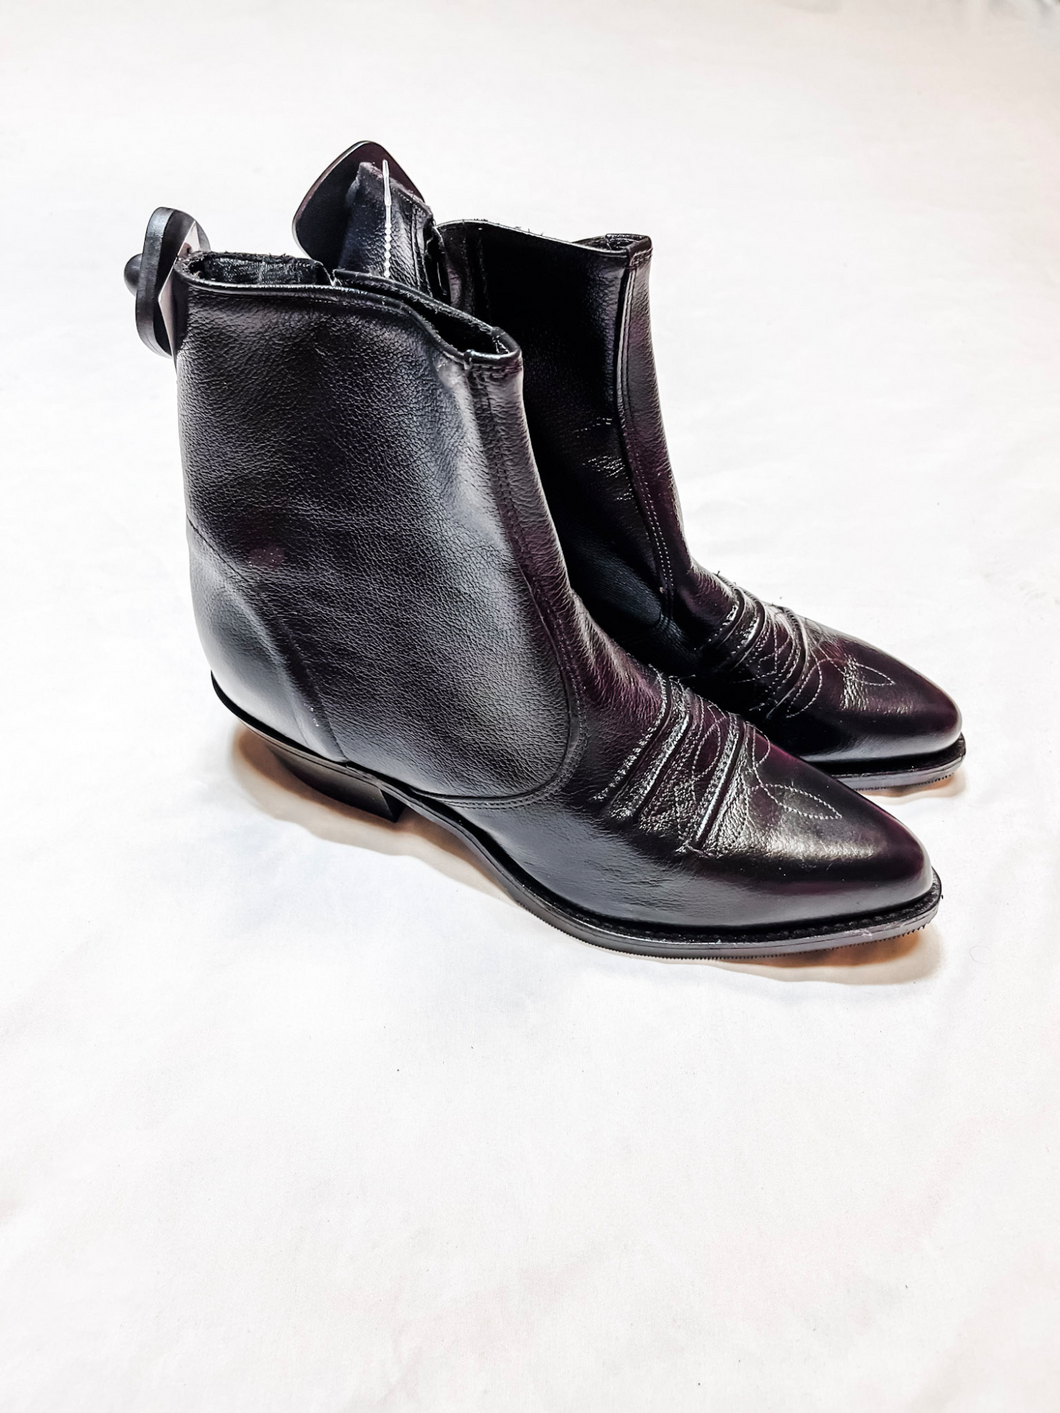 Boots Womens 8 * - Plato's Closet Morgantown, WV